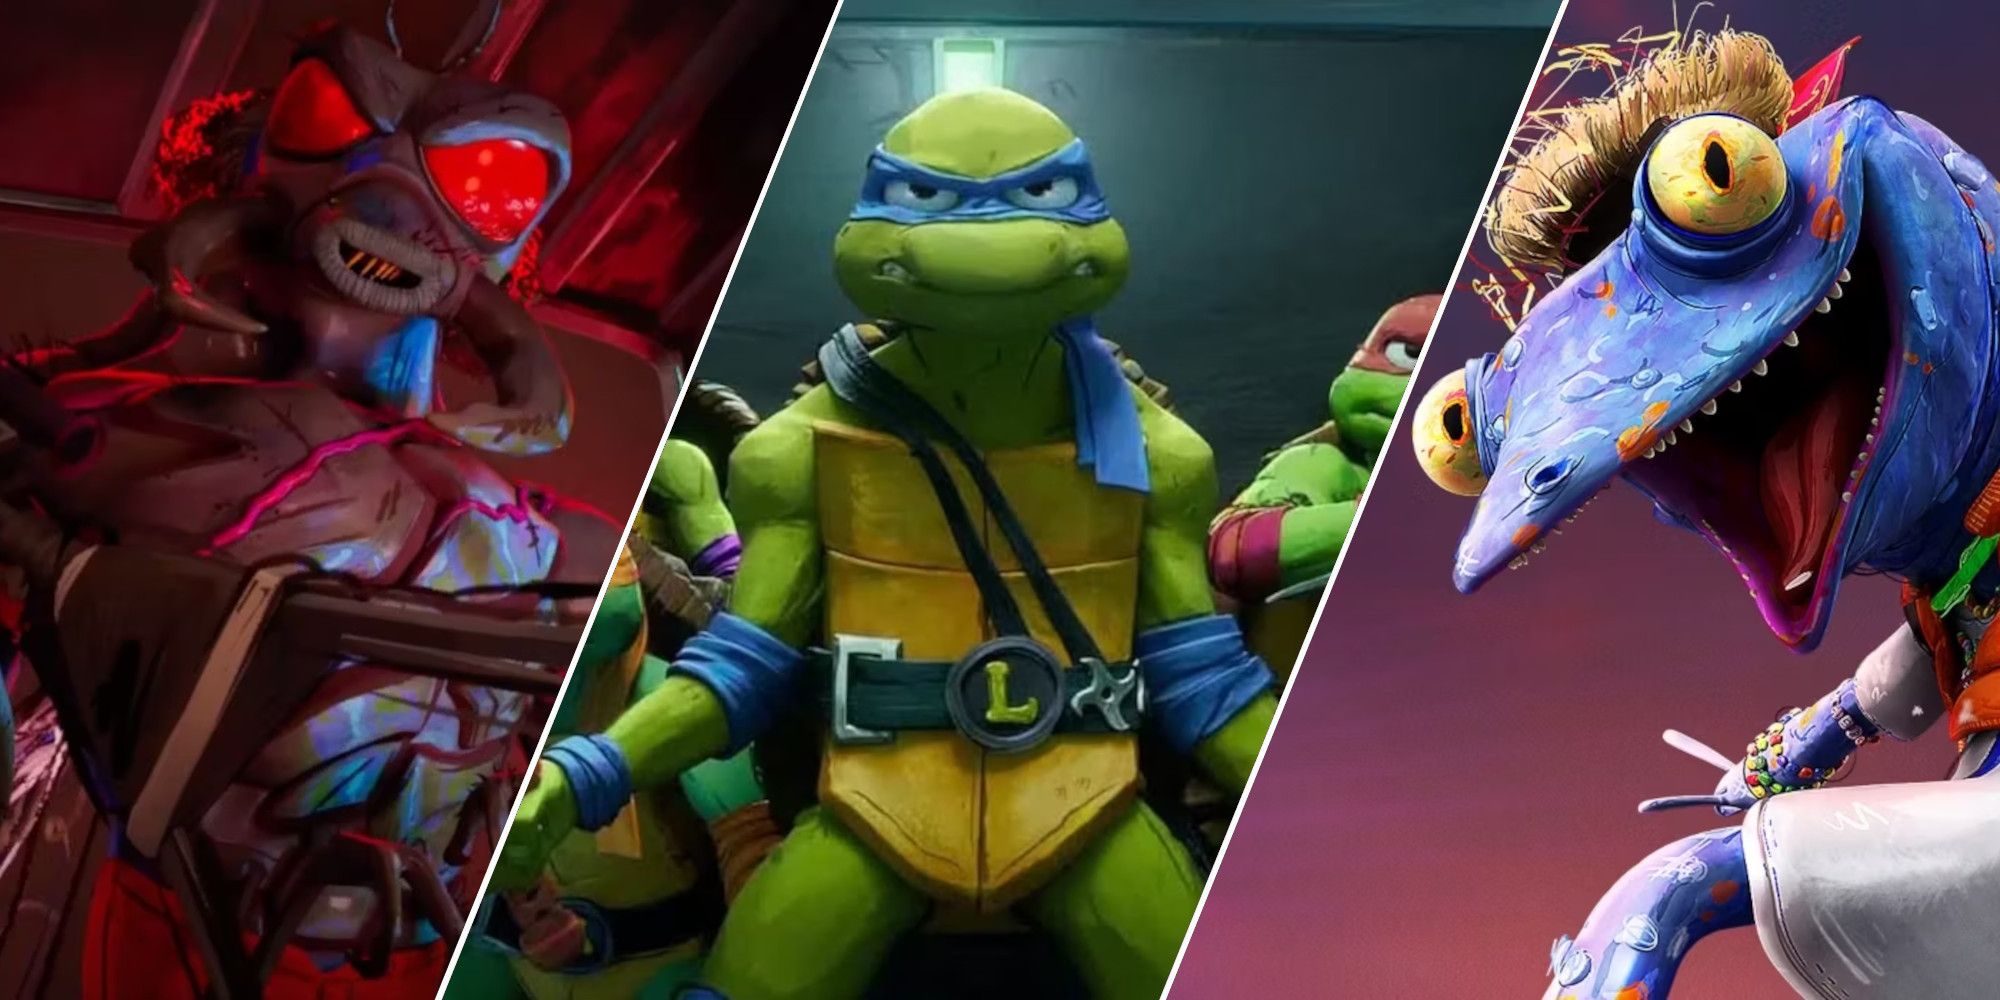 Ninja Turtles Mutant Mayhem the Bad Guys Super Fly Rocksteady & BeBop  Action Figure Review 